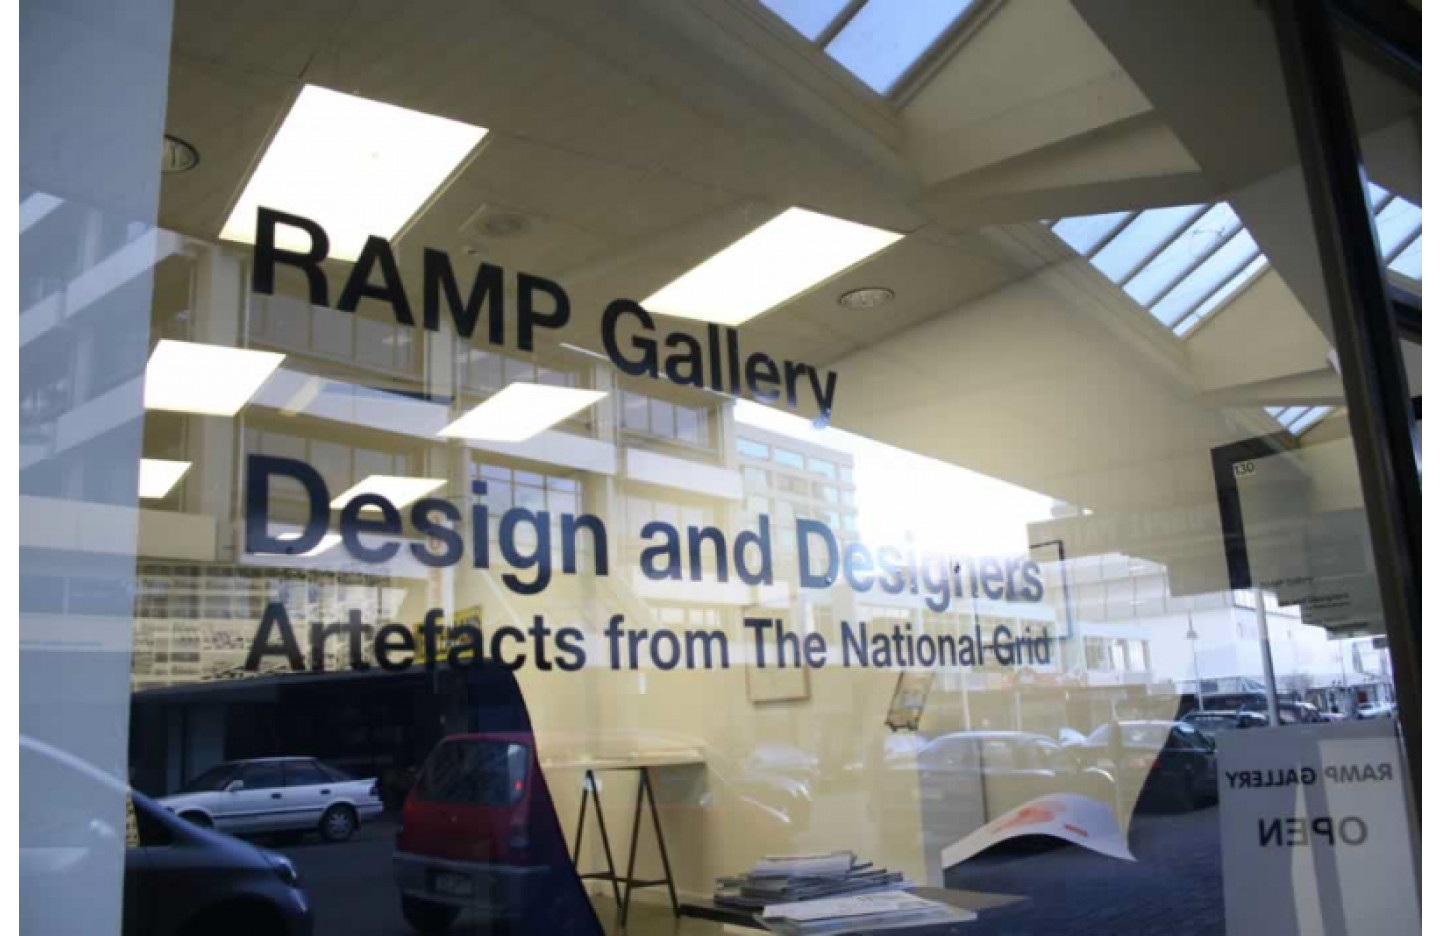 SPARK Festival / RAMP Gallery present Design&Designers, Ramp Gallery (2012)